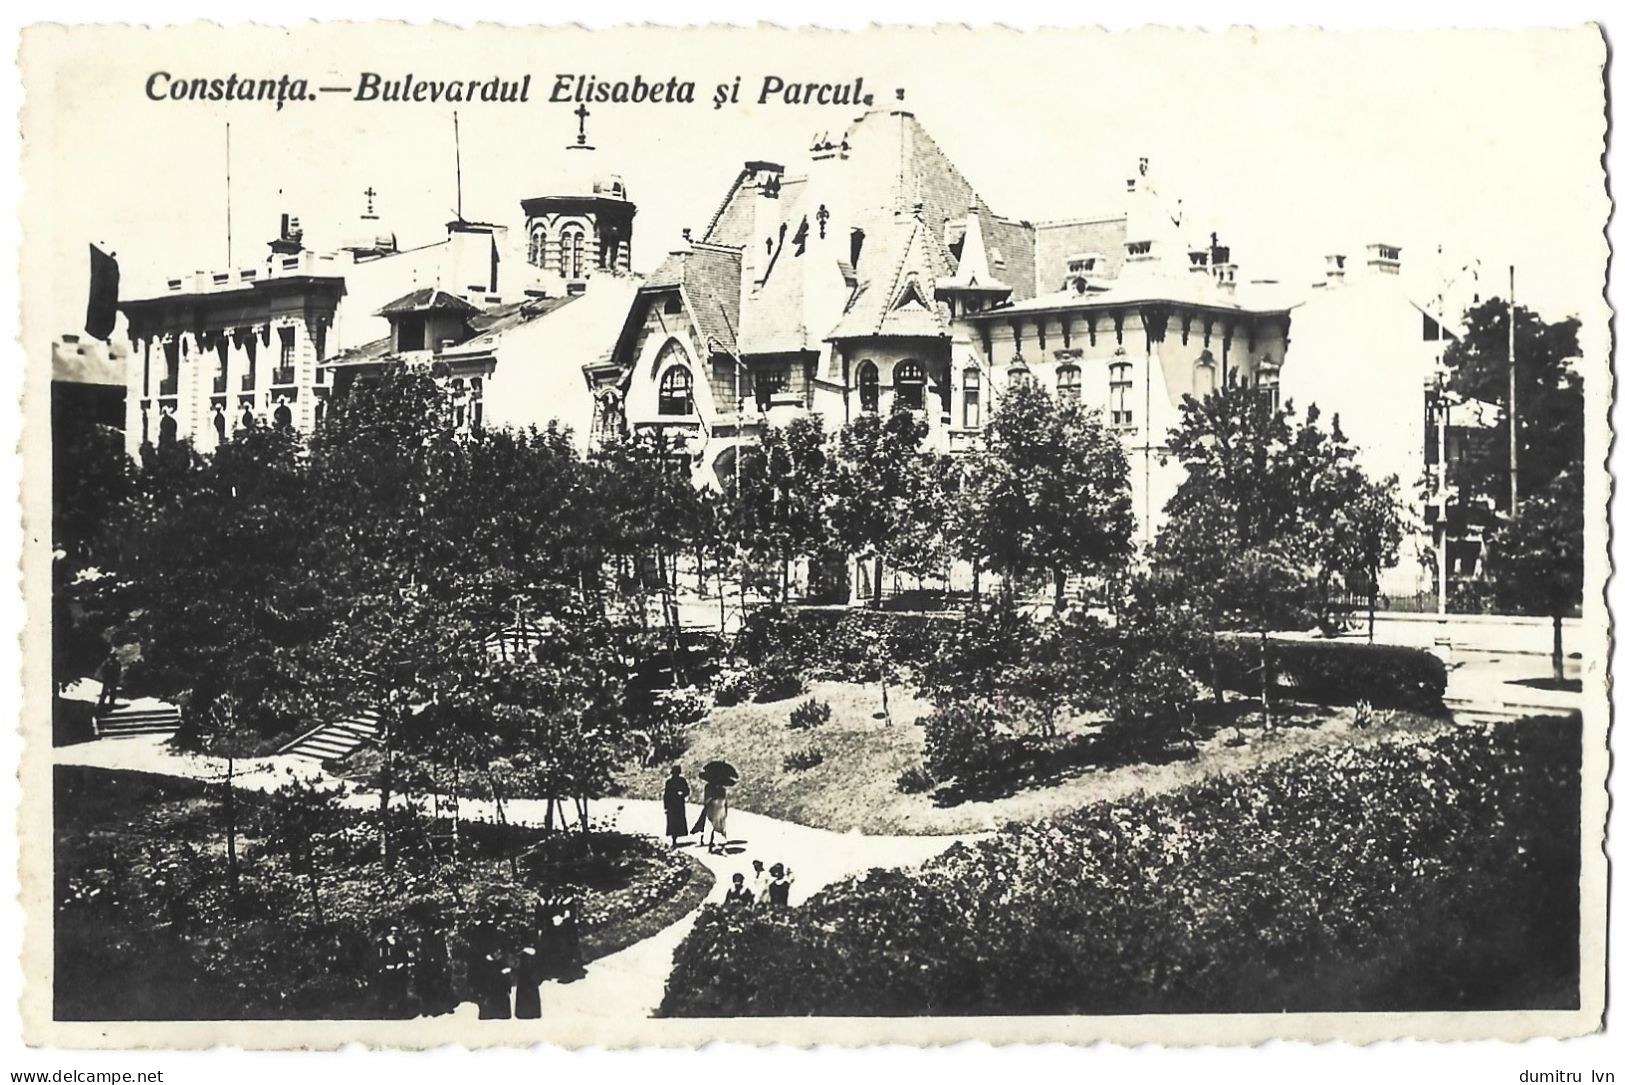 ROMANIA 1936 CONSTANTA - ELISABETA BOULEVARD AND THE PARK, BUILDINGS, ARCHITECTURE, PEOPLE - Rumänien